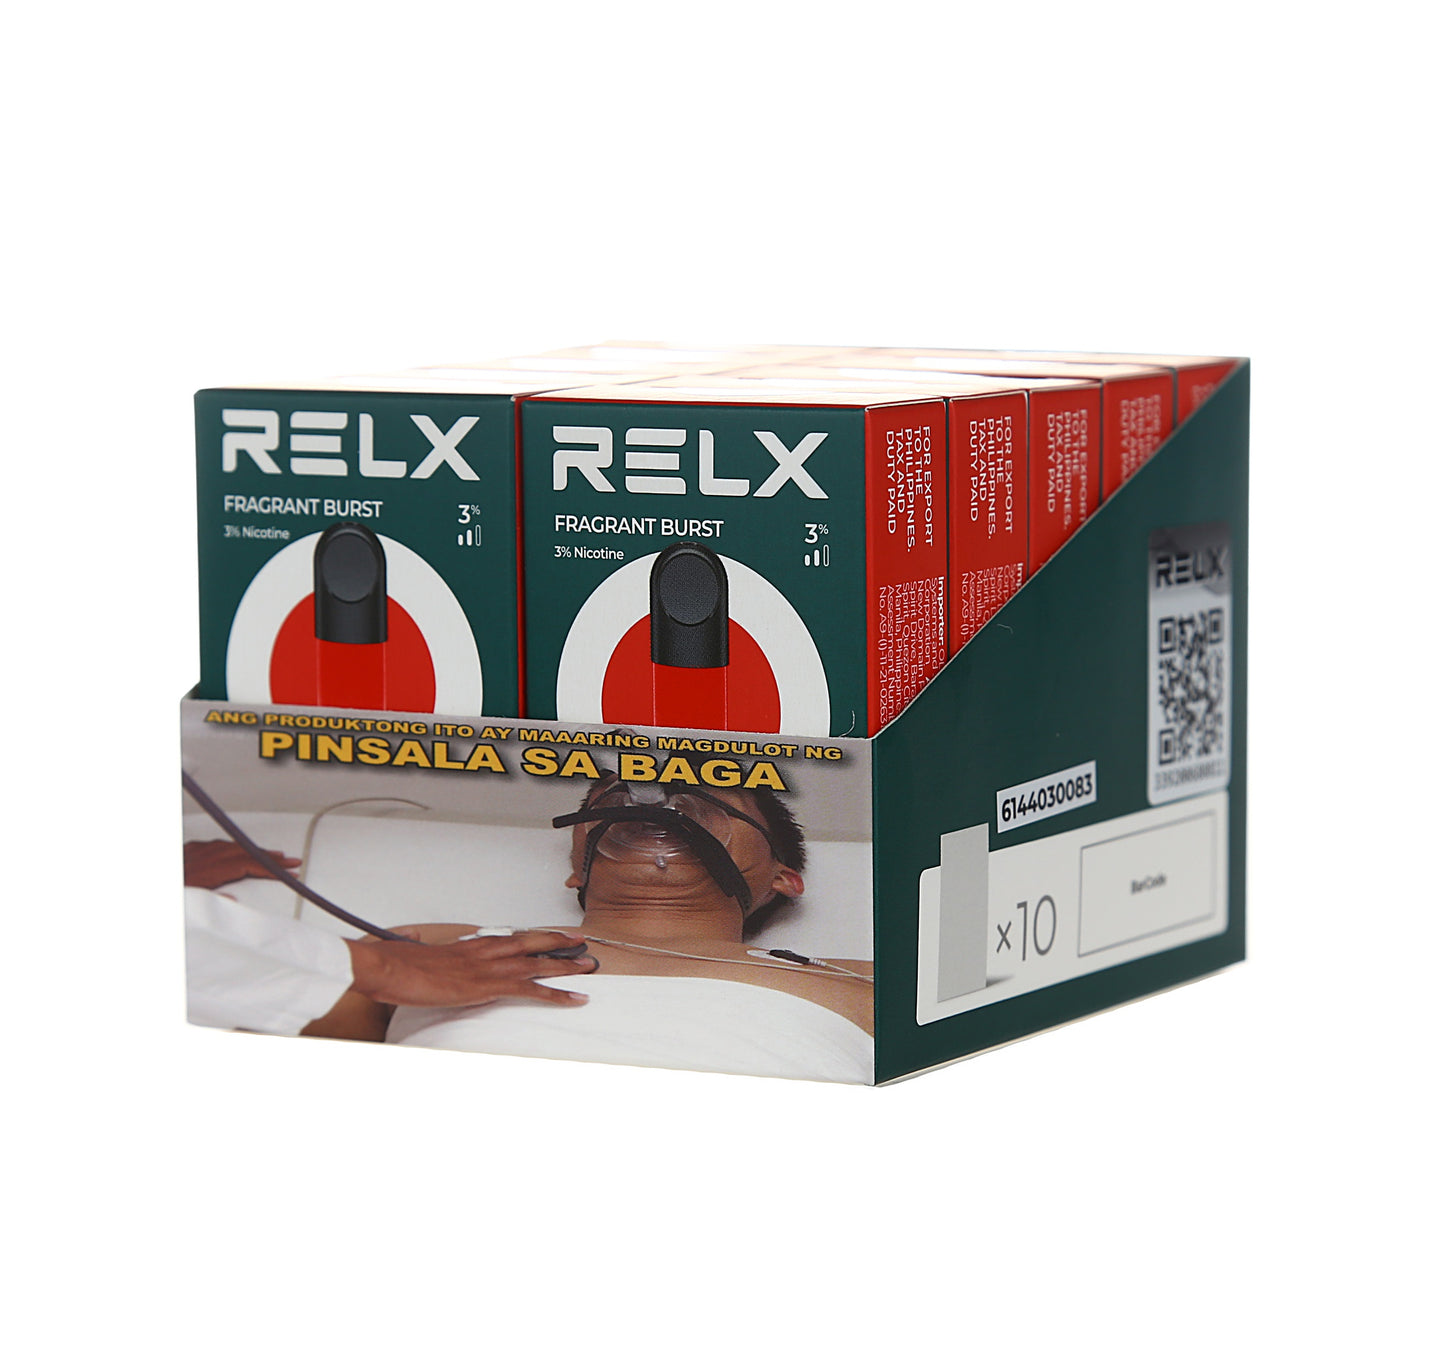 Relx Pro Pod Box of 10 - Multiple Flavors 3-5% Nic